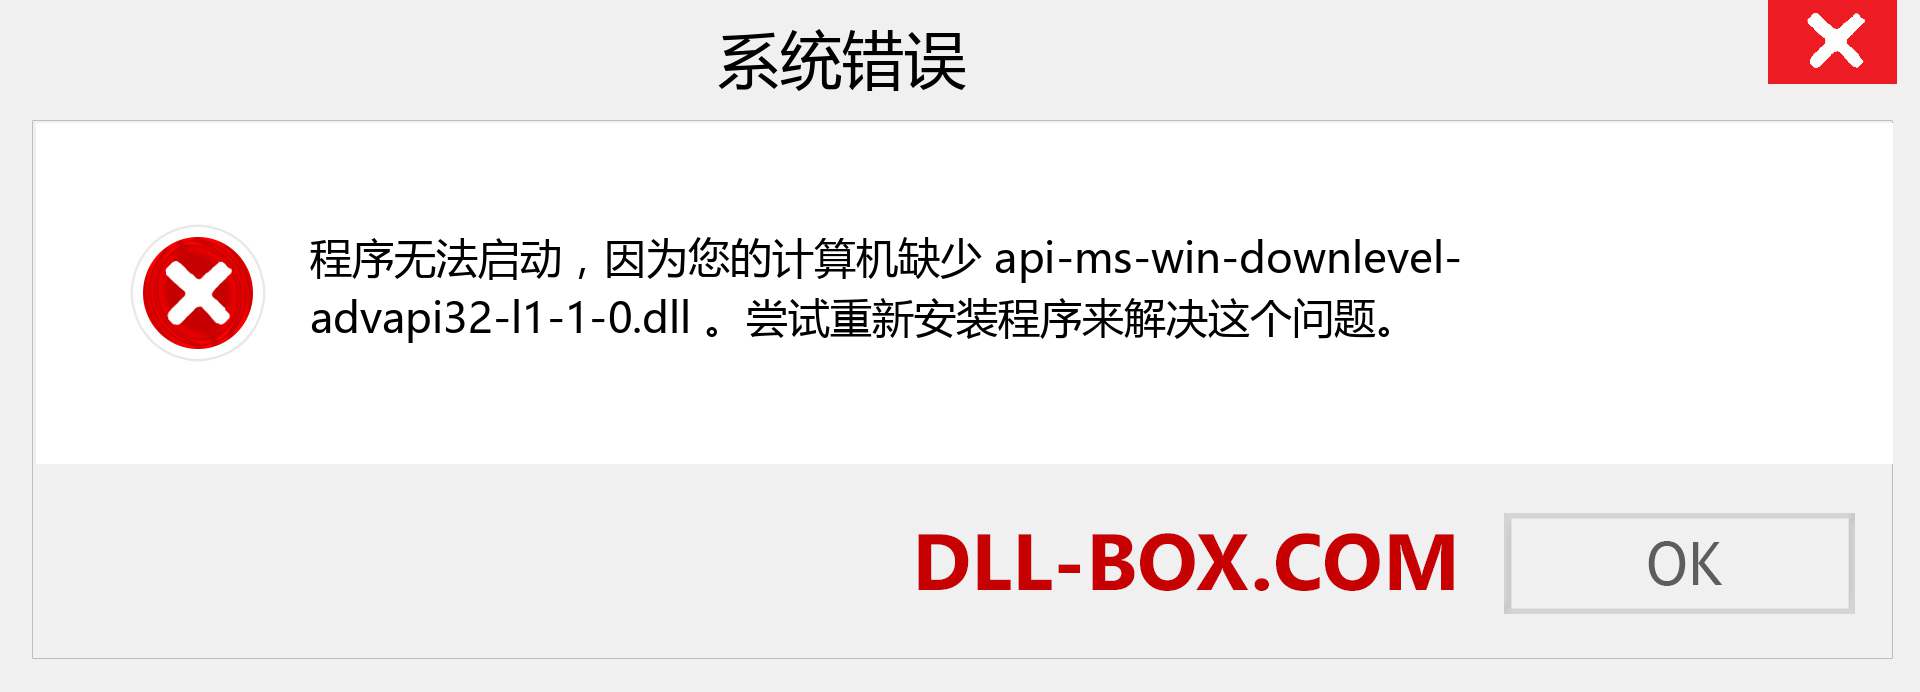 api-ms-win-downlevel-advapi32-l1-1-0.dll 文件丢失？。 适用于 Windows 7、8、10 的下载 - 修复 Windows、照片、图像上的 api-ms-win-downlevel-advapi32-l1-1-0 dll 丢失错误